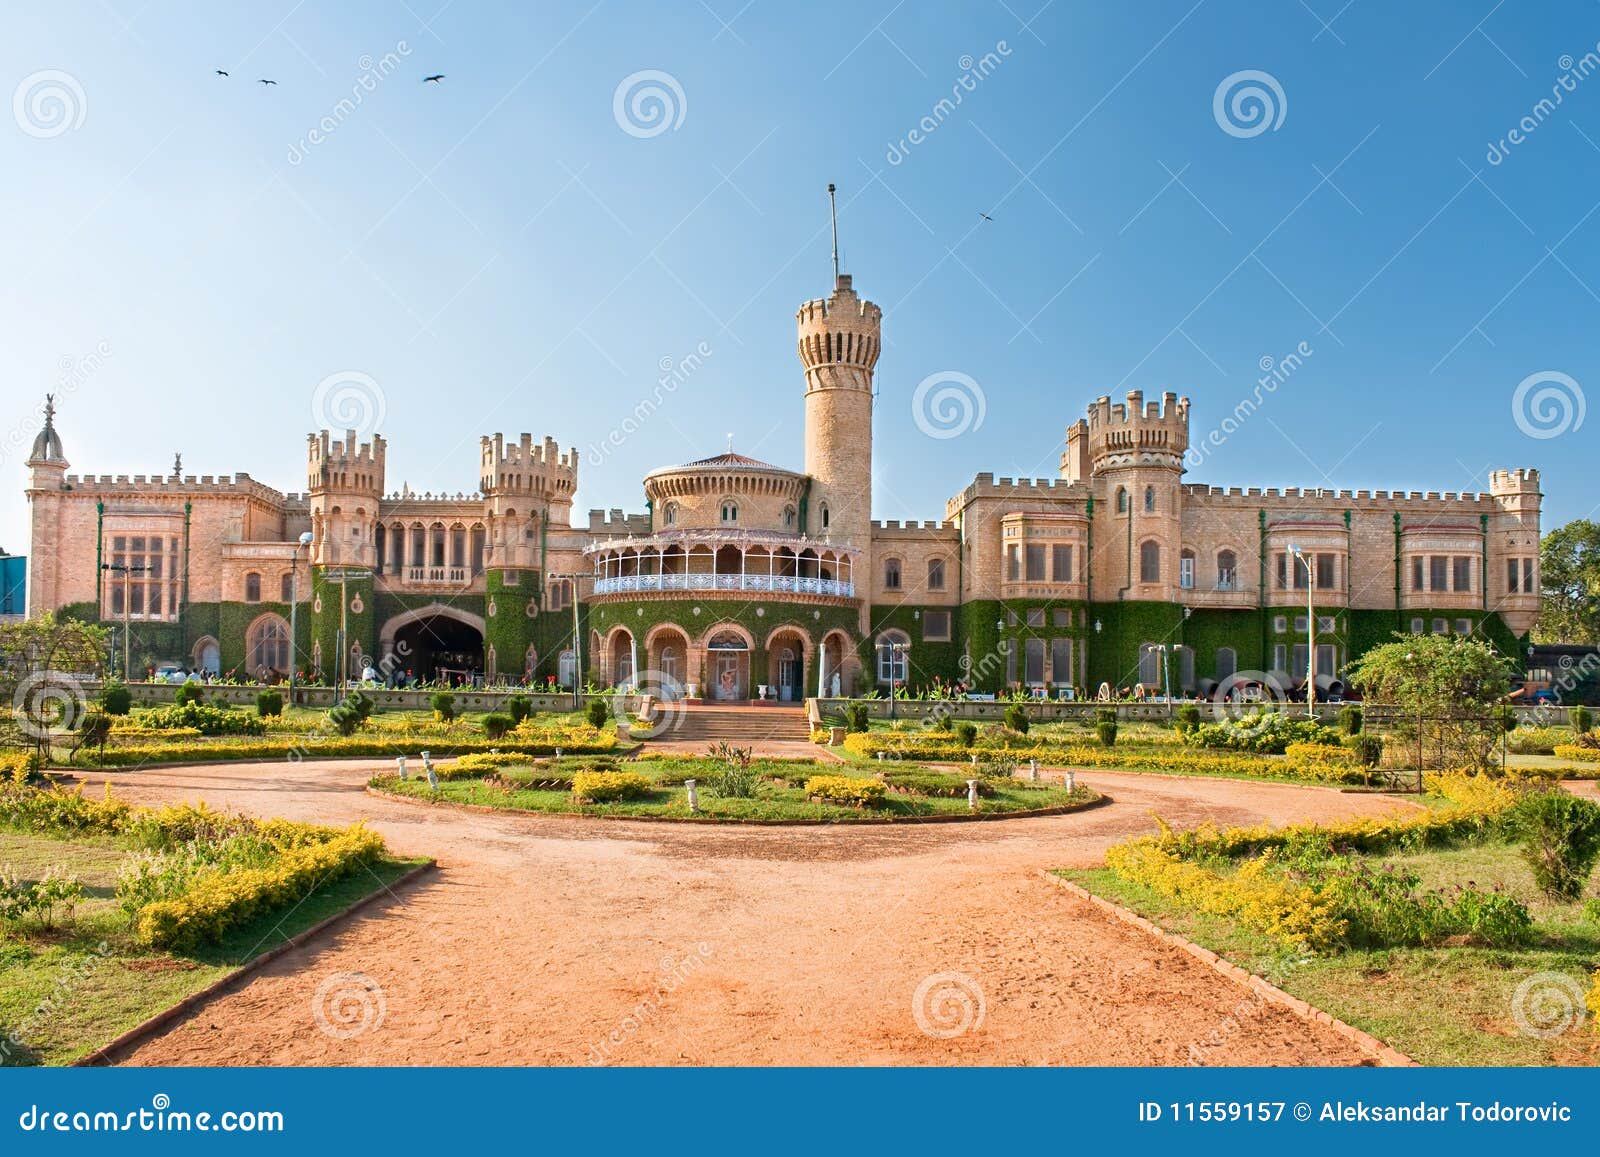 the bangalore palace in southern karnataka, india